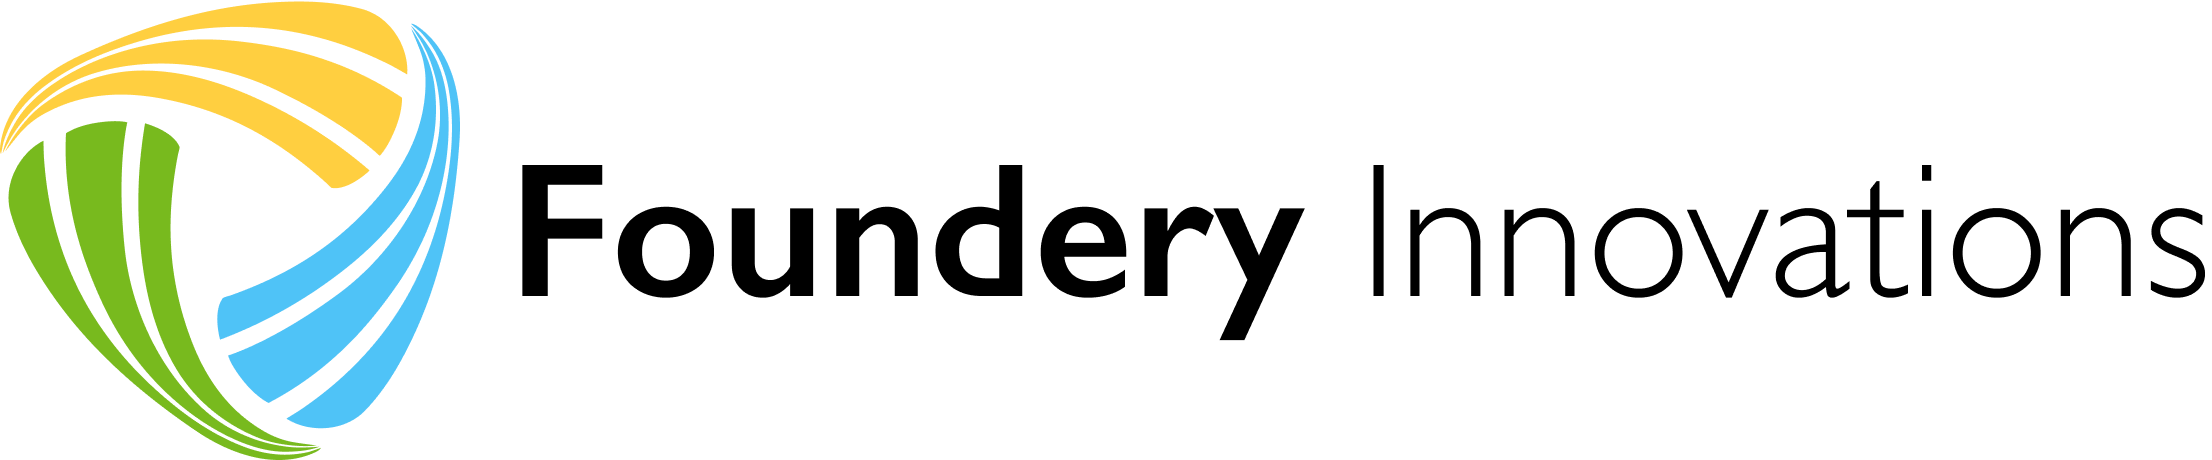 Foundery Logo_Horizontal_Black.png